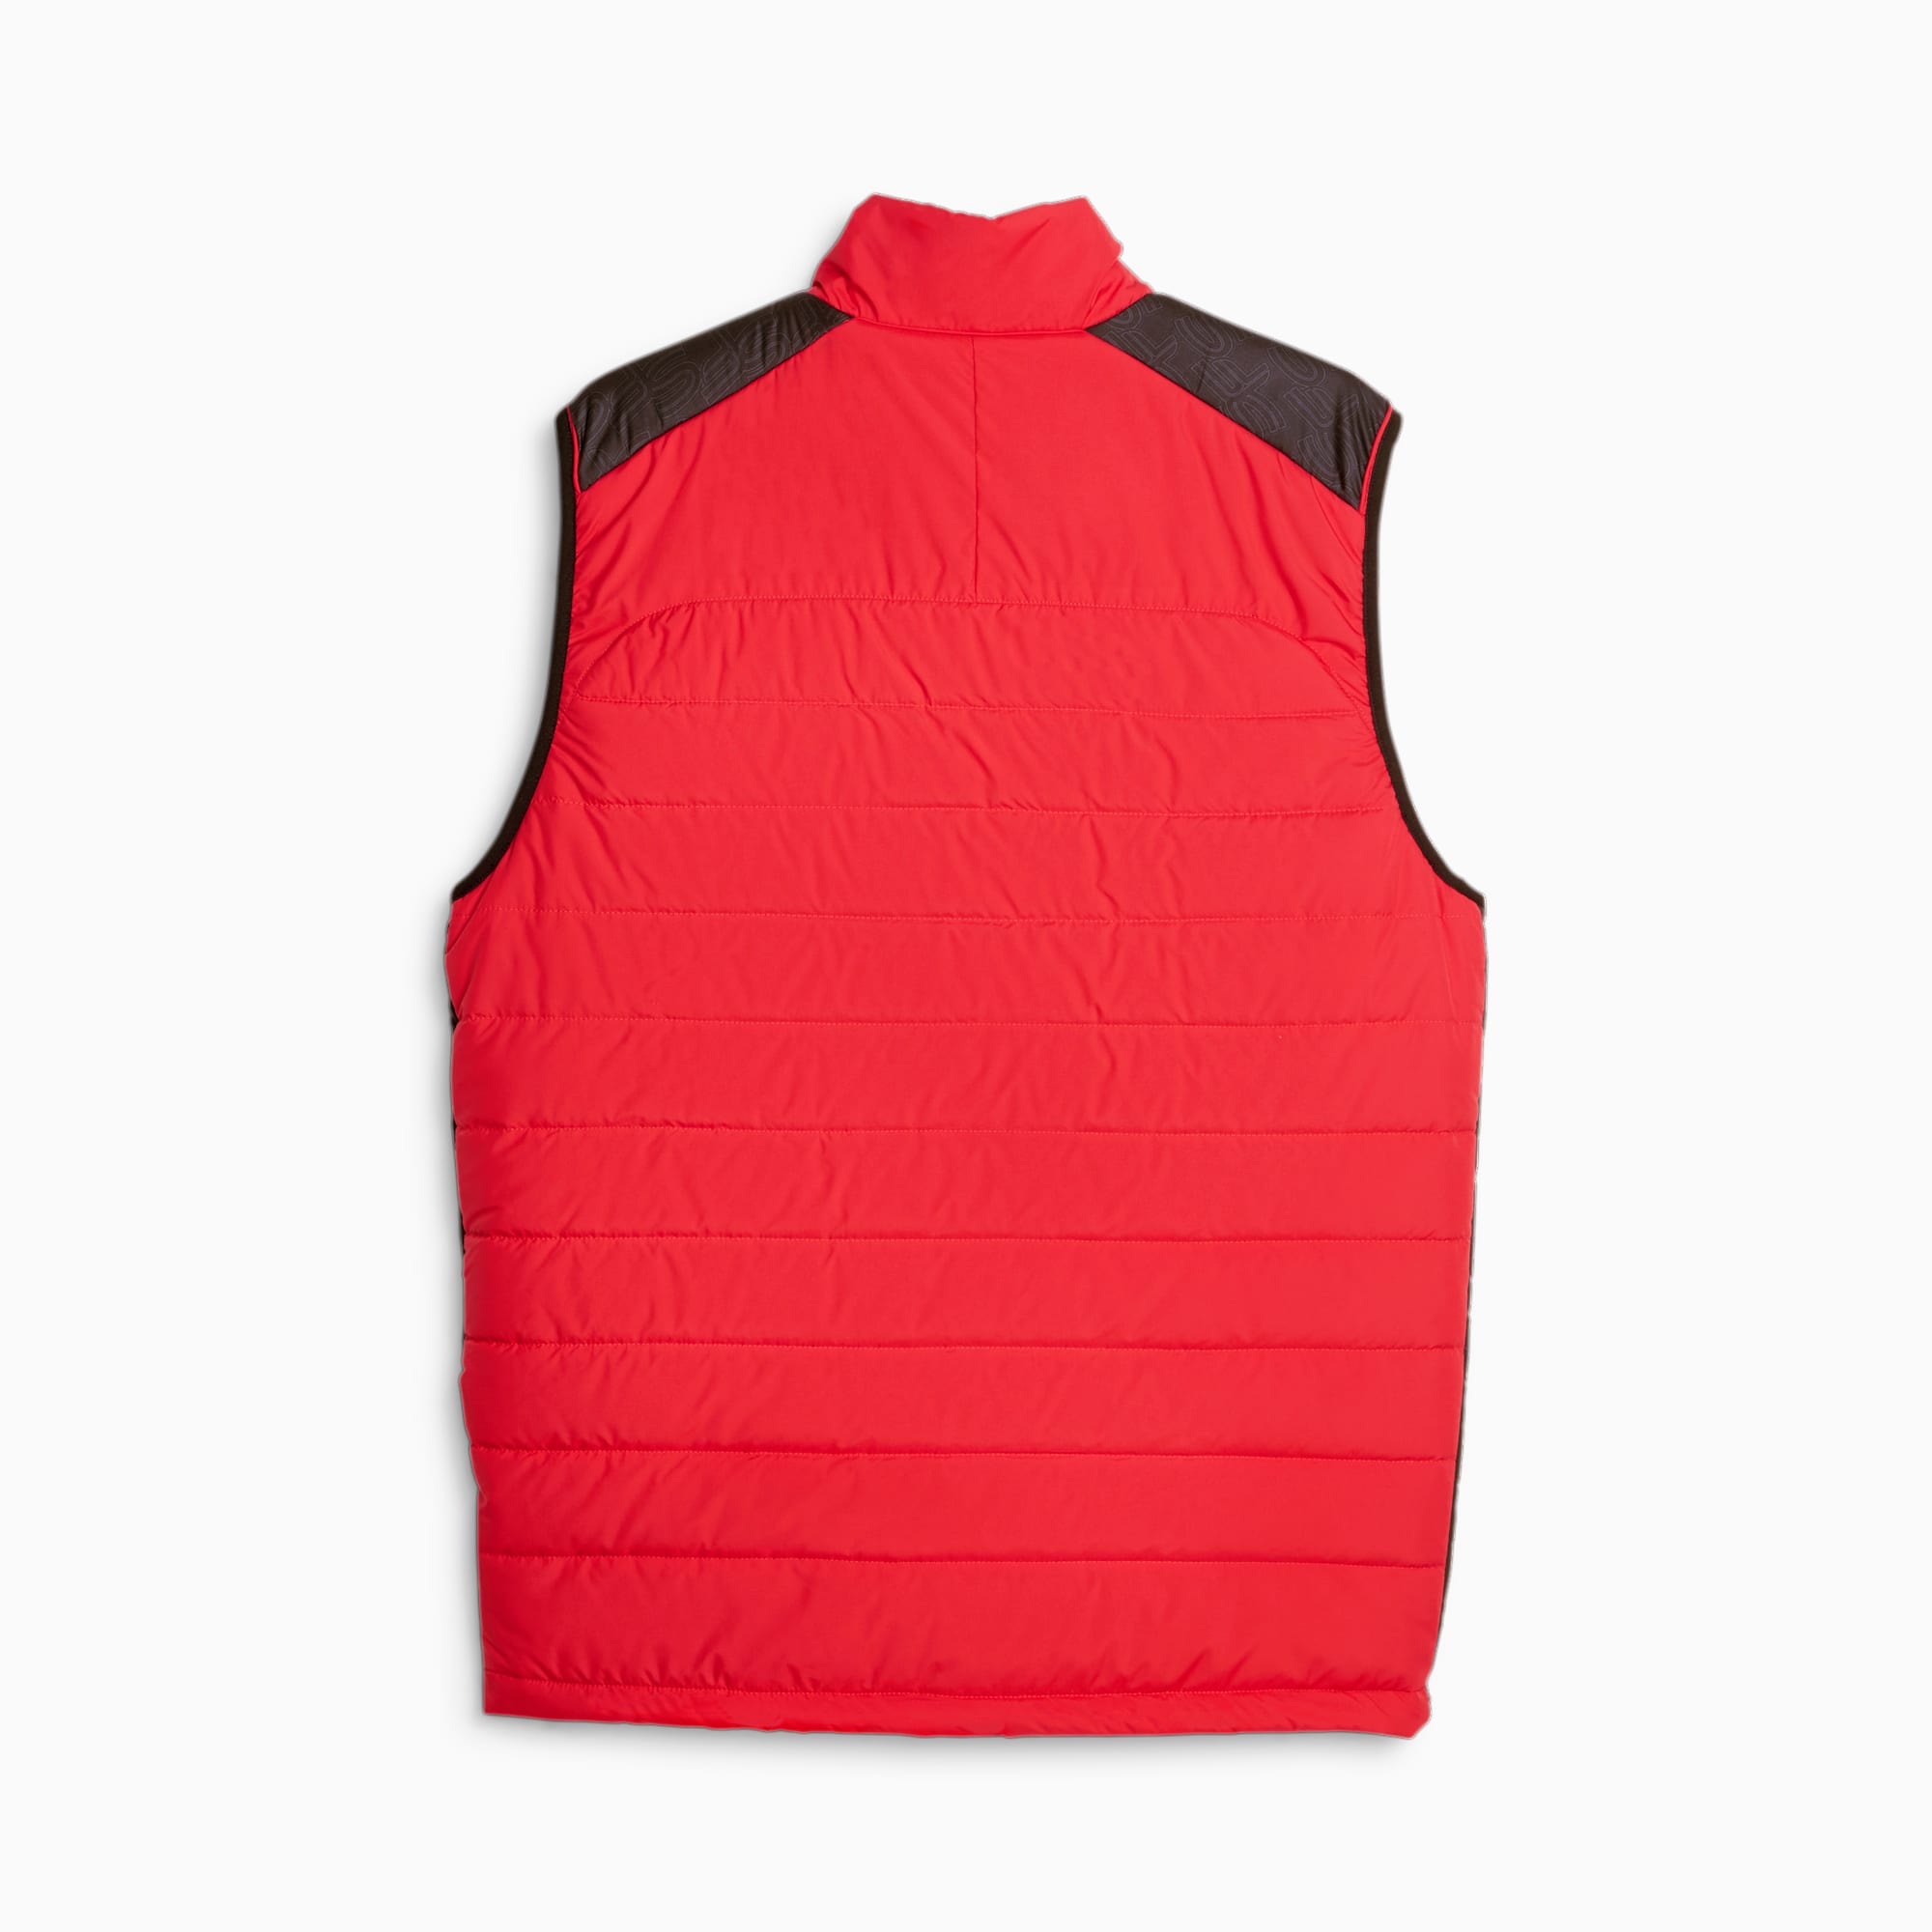 PUMA Scuderia Ferrari Race Men's Padded Vest Men's Jacket, Red, Size L, Clothing